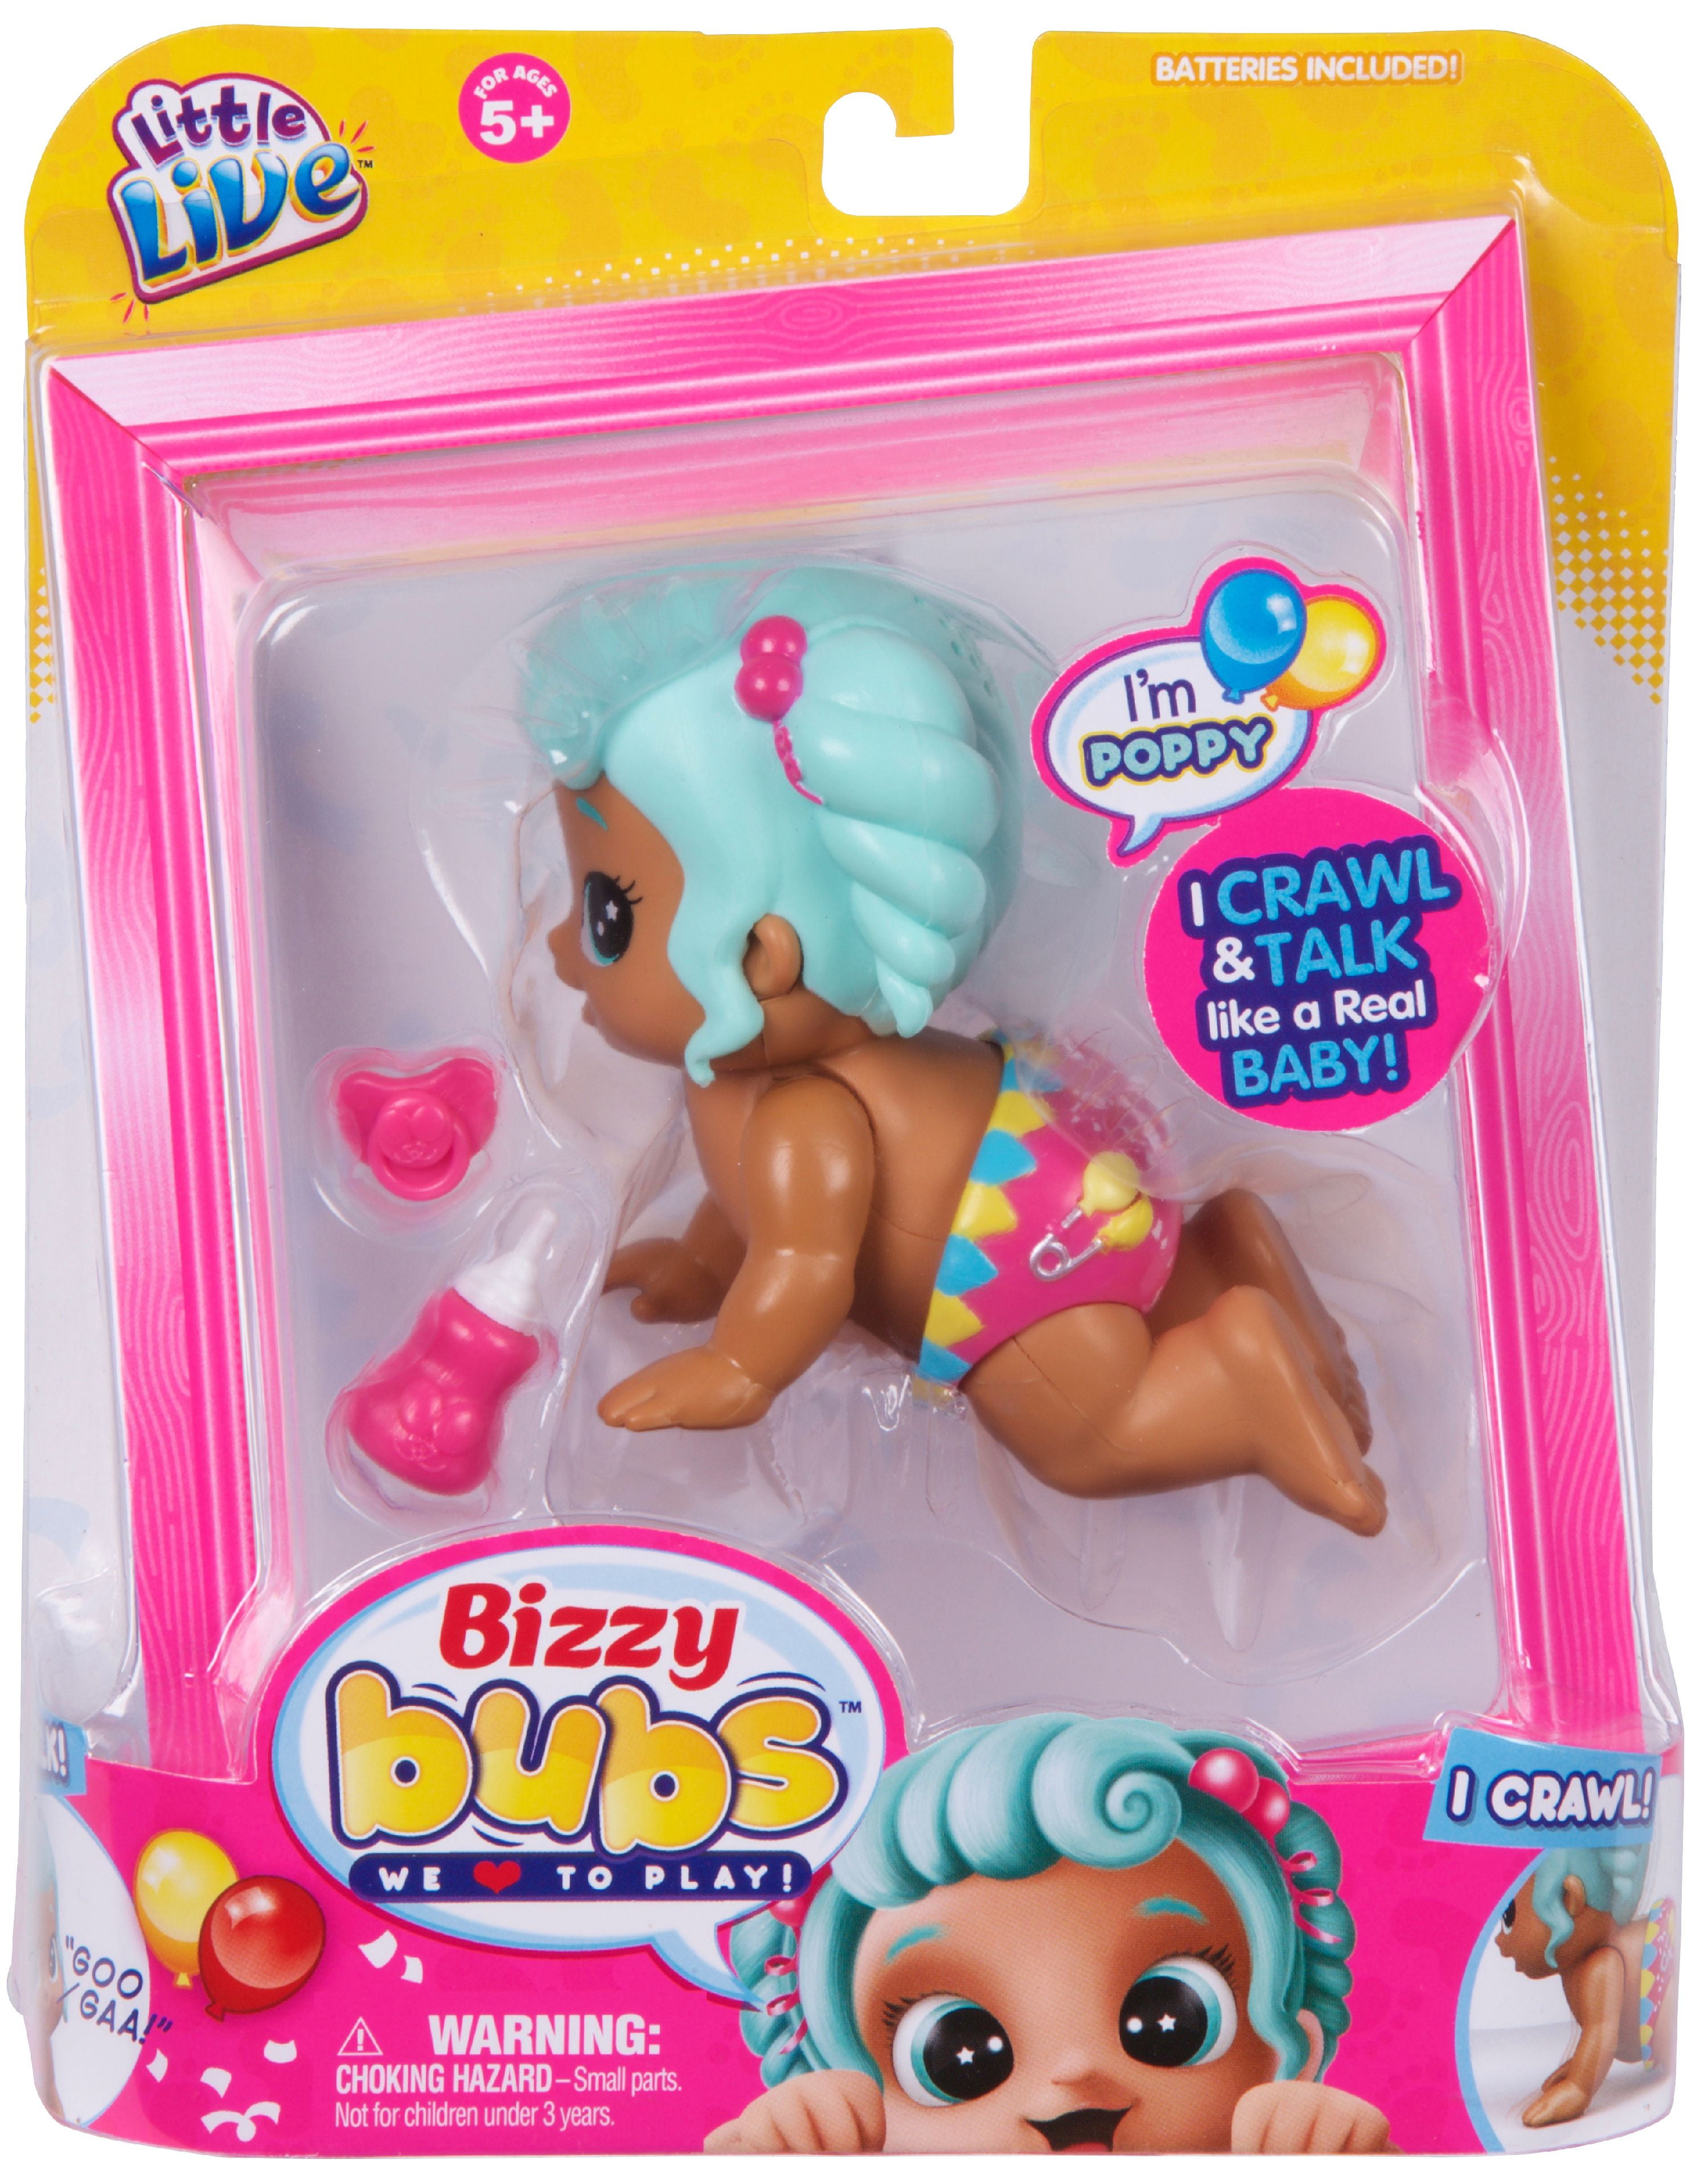 Bizzy Bubs s1-rastreo Baby Poppy-Little Live Bizzy Bubs 